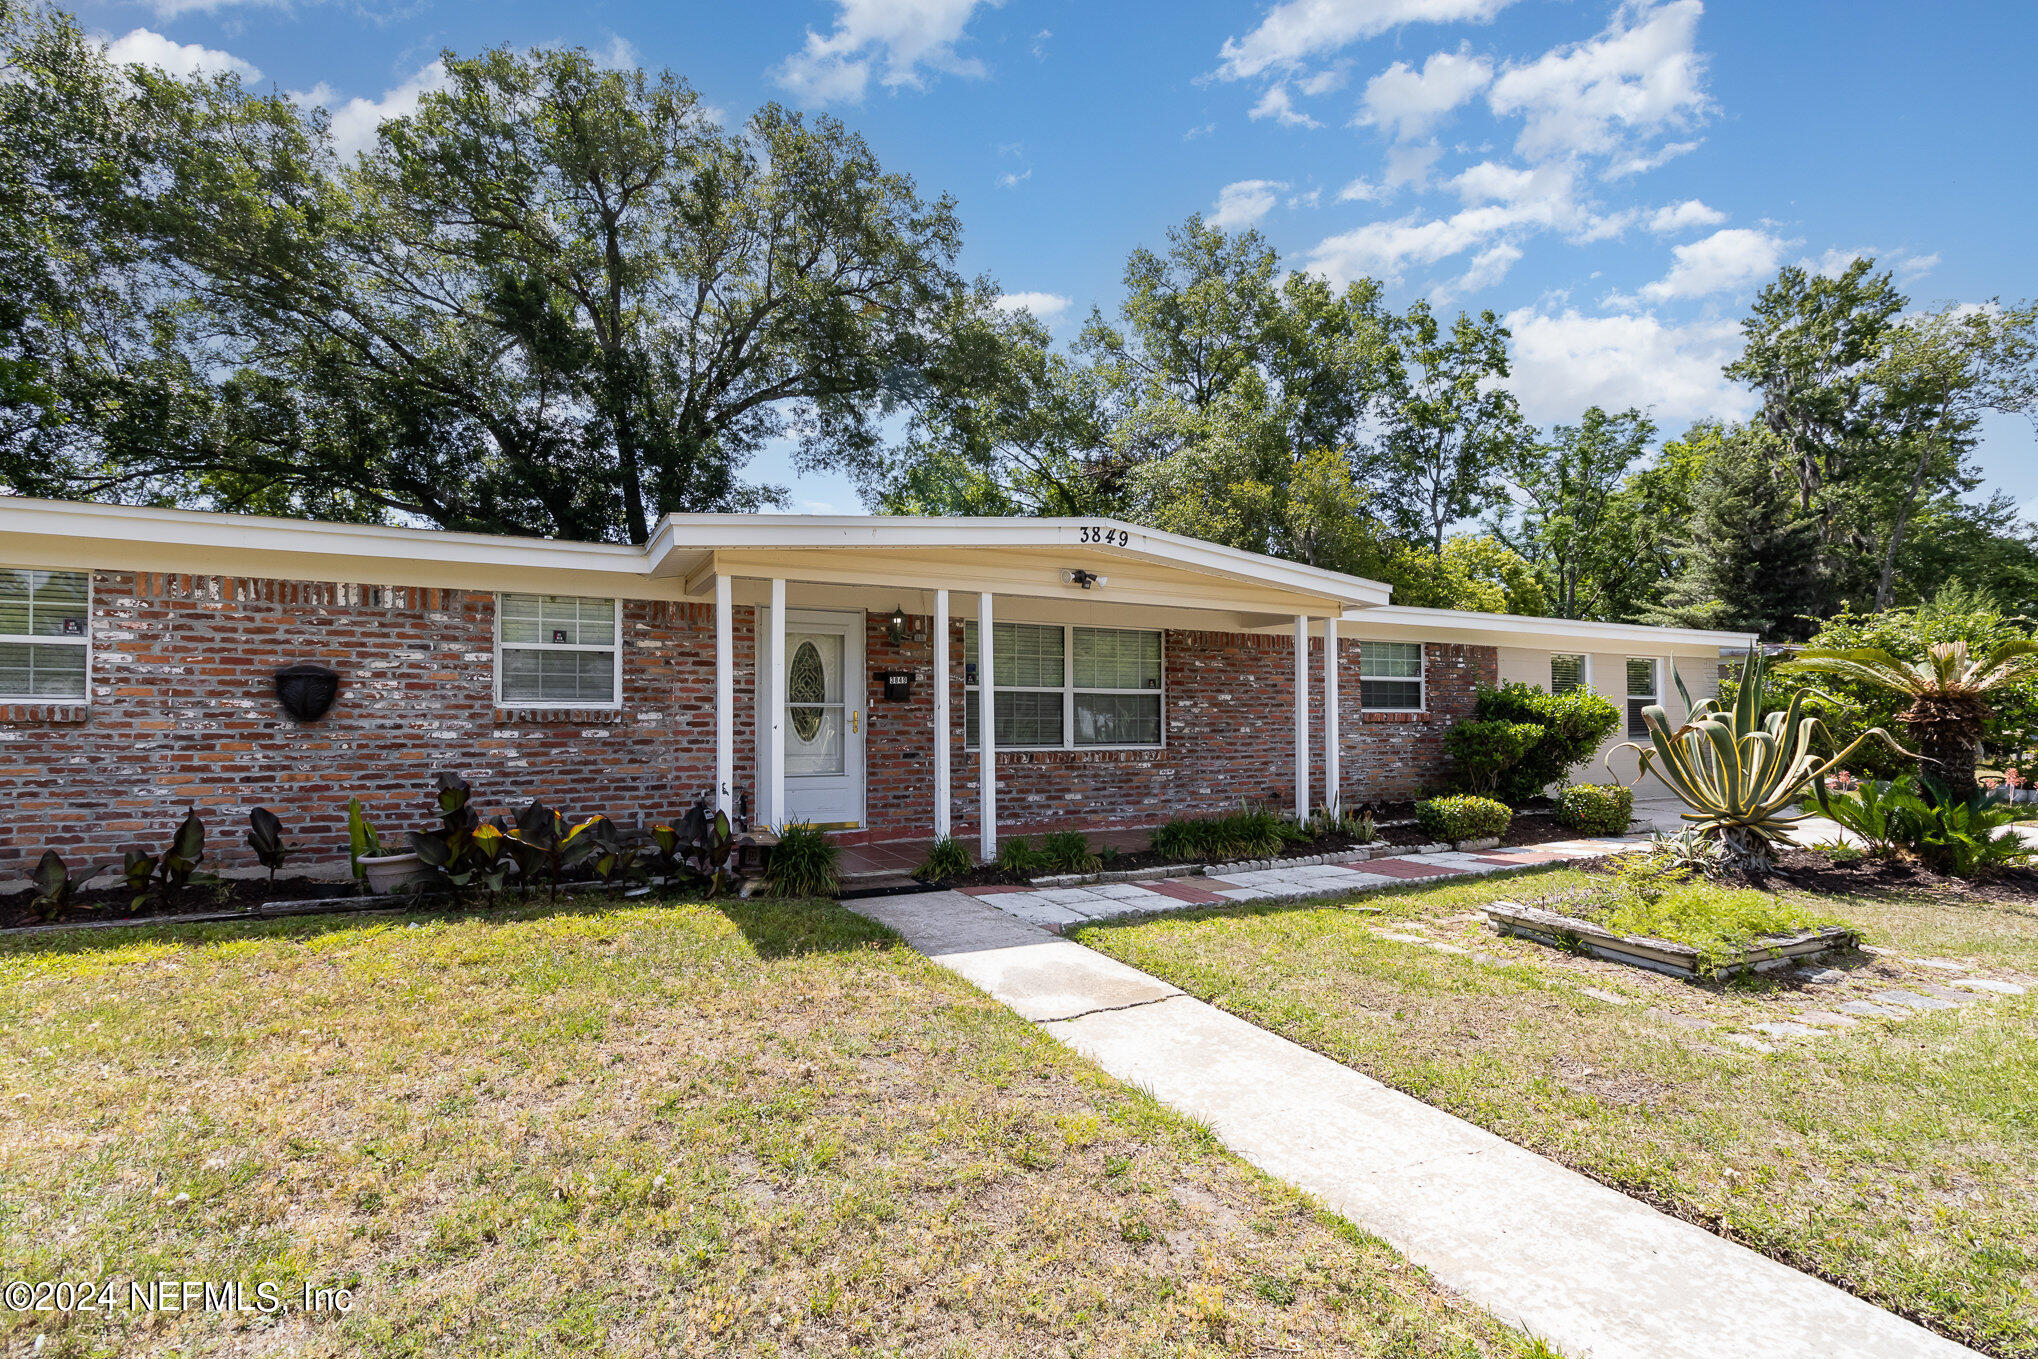 Jacksonville, FL home for sale located at 3849 S Lane Avenue, Jacksonville, FL 32210